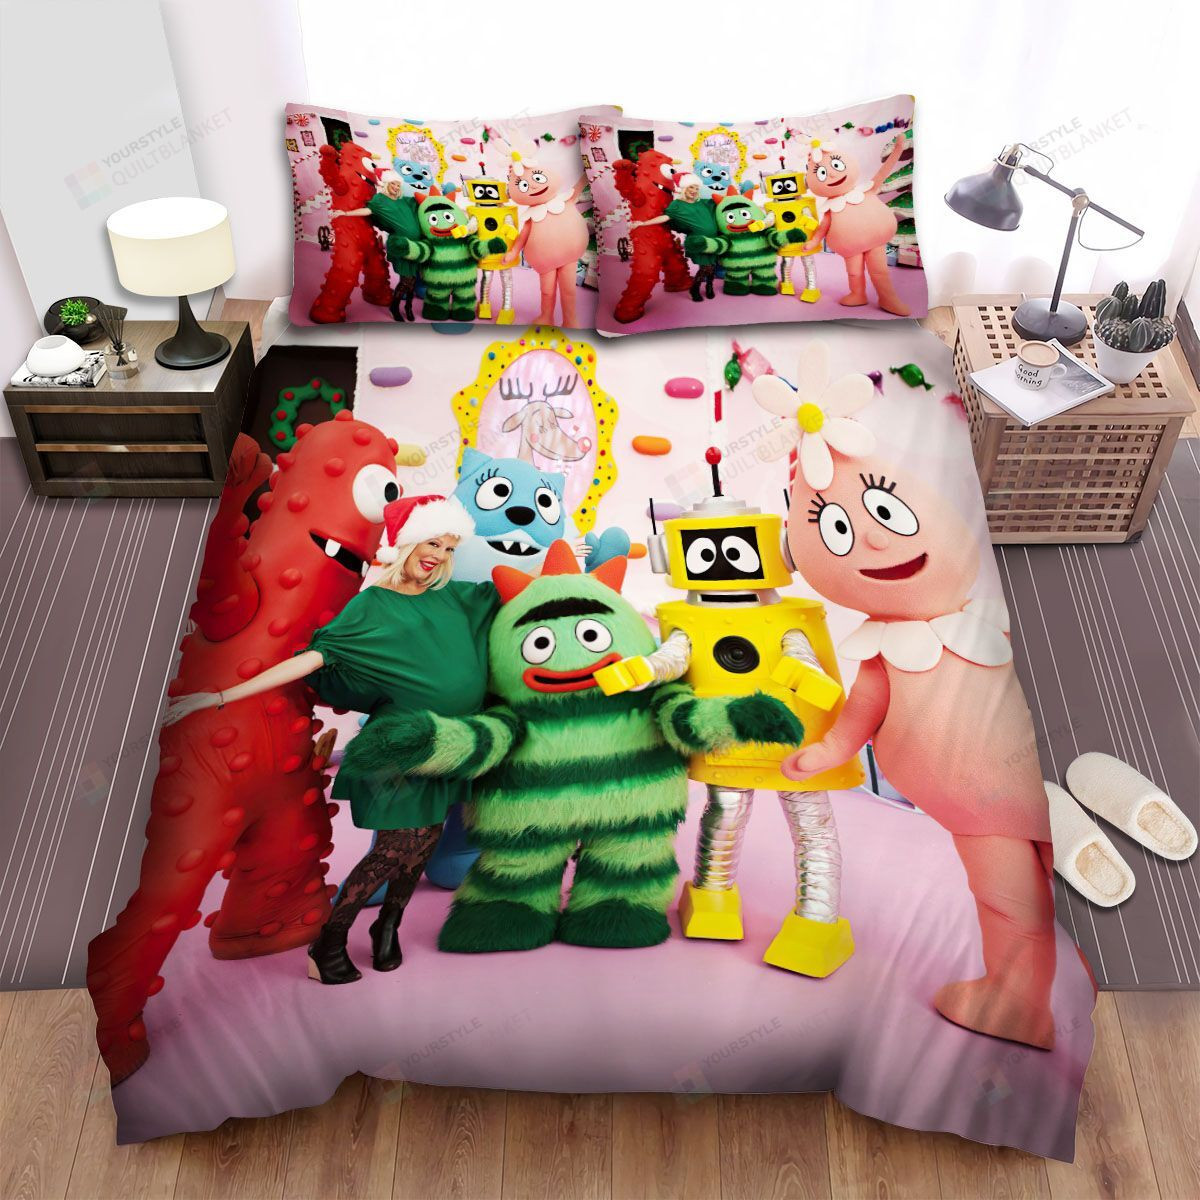 Yo Gabba Gabba! Reality Show Bed Sheets Spread Comforter Duvet Cover Bedding Sets